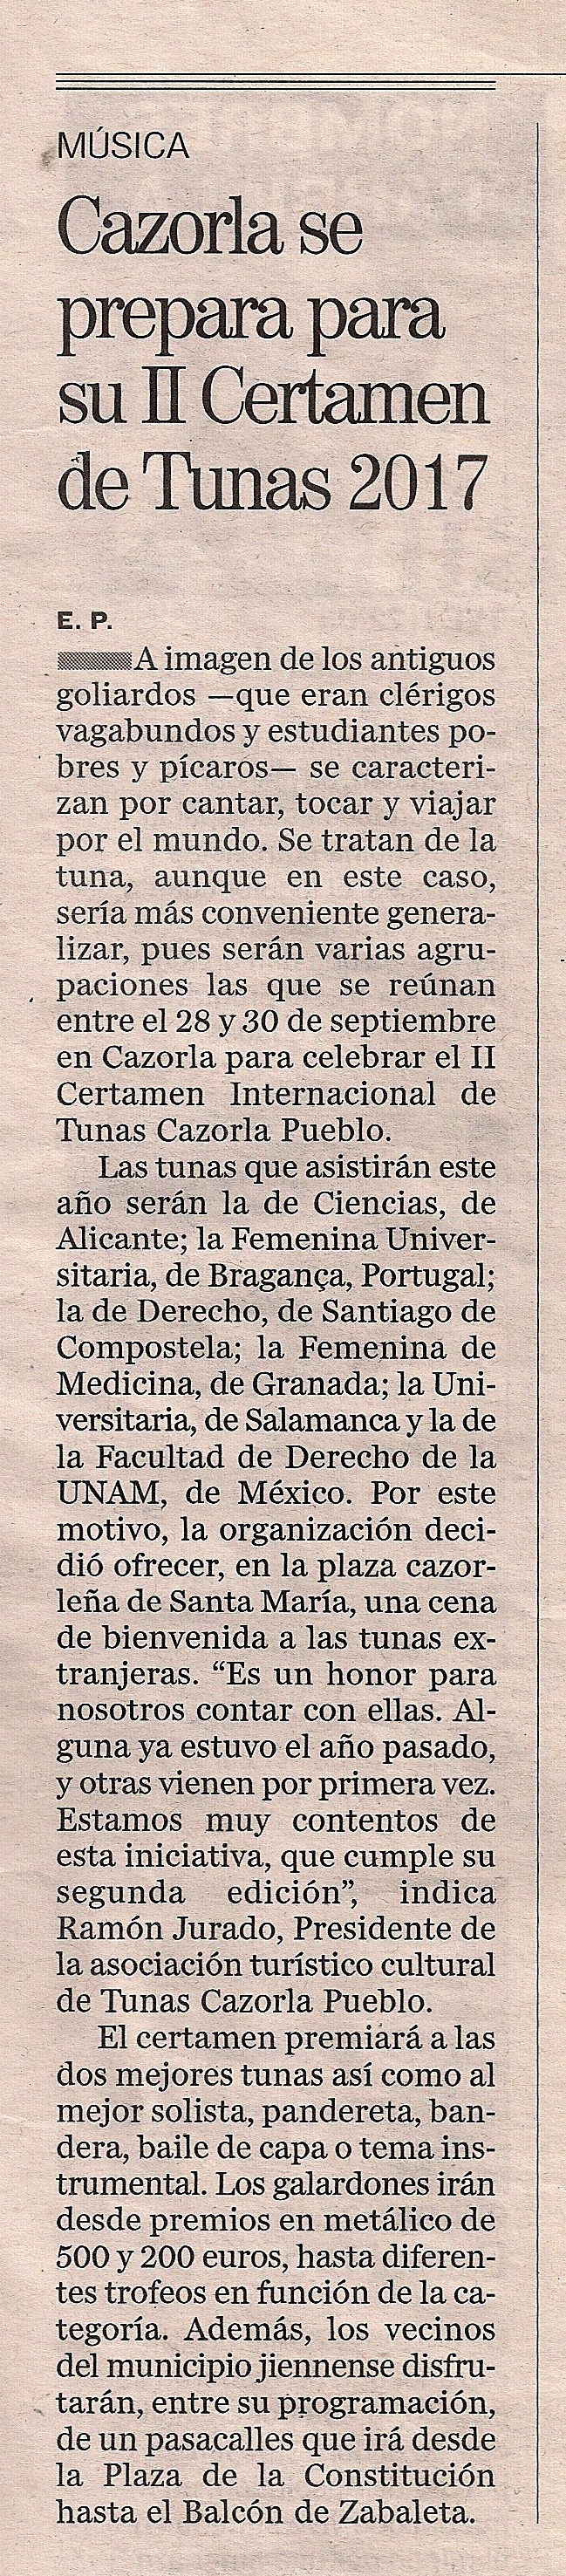 Diario Jaén 12 de Septiembre 2017